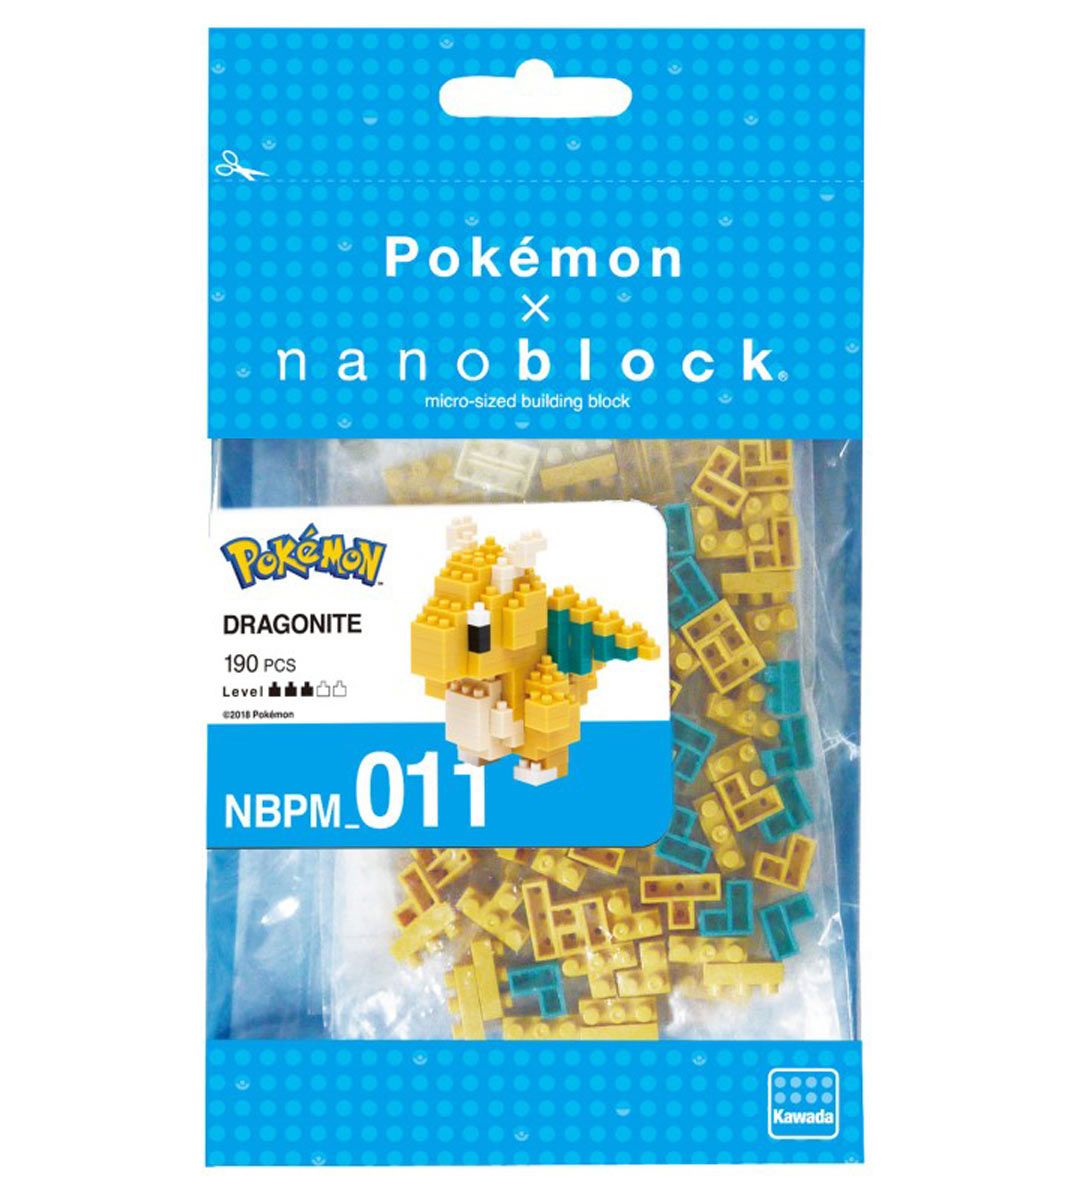 Pokémon x Nanoblock - Dracolosse - NBPM 011